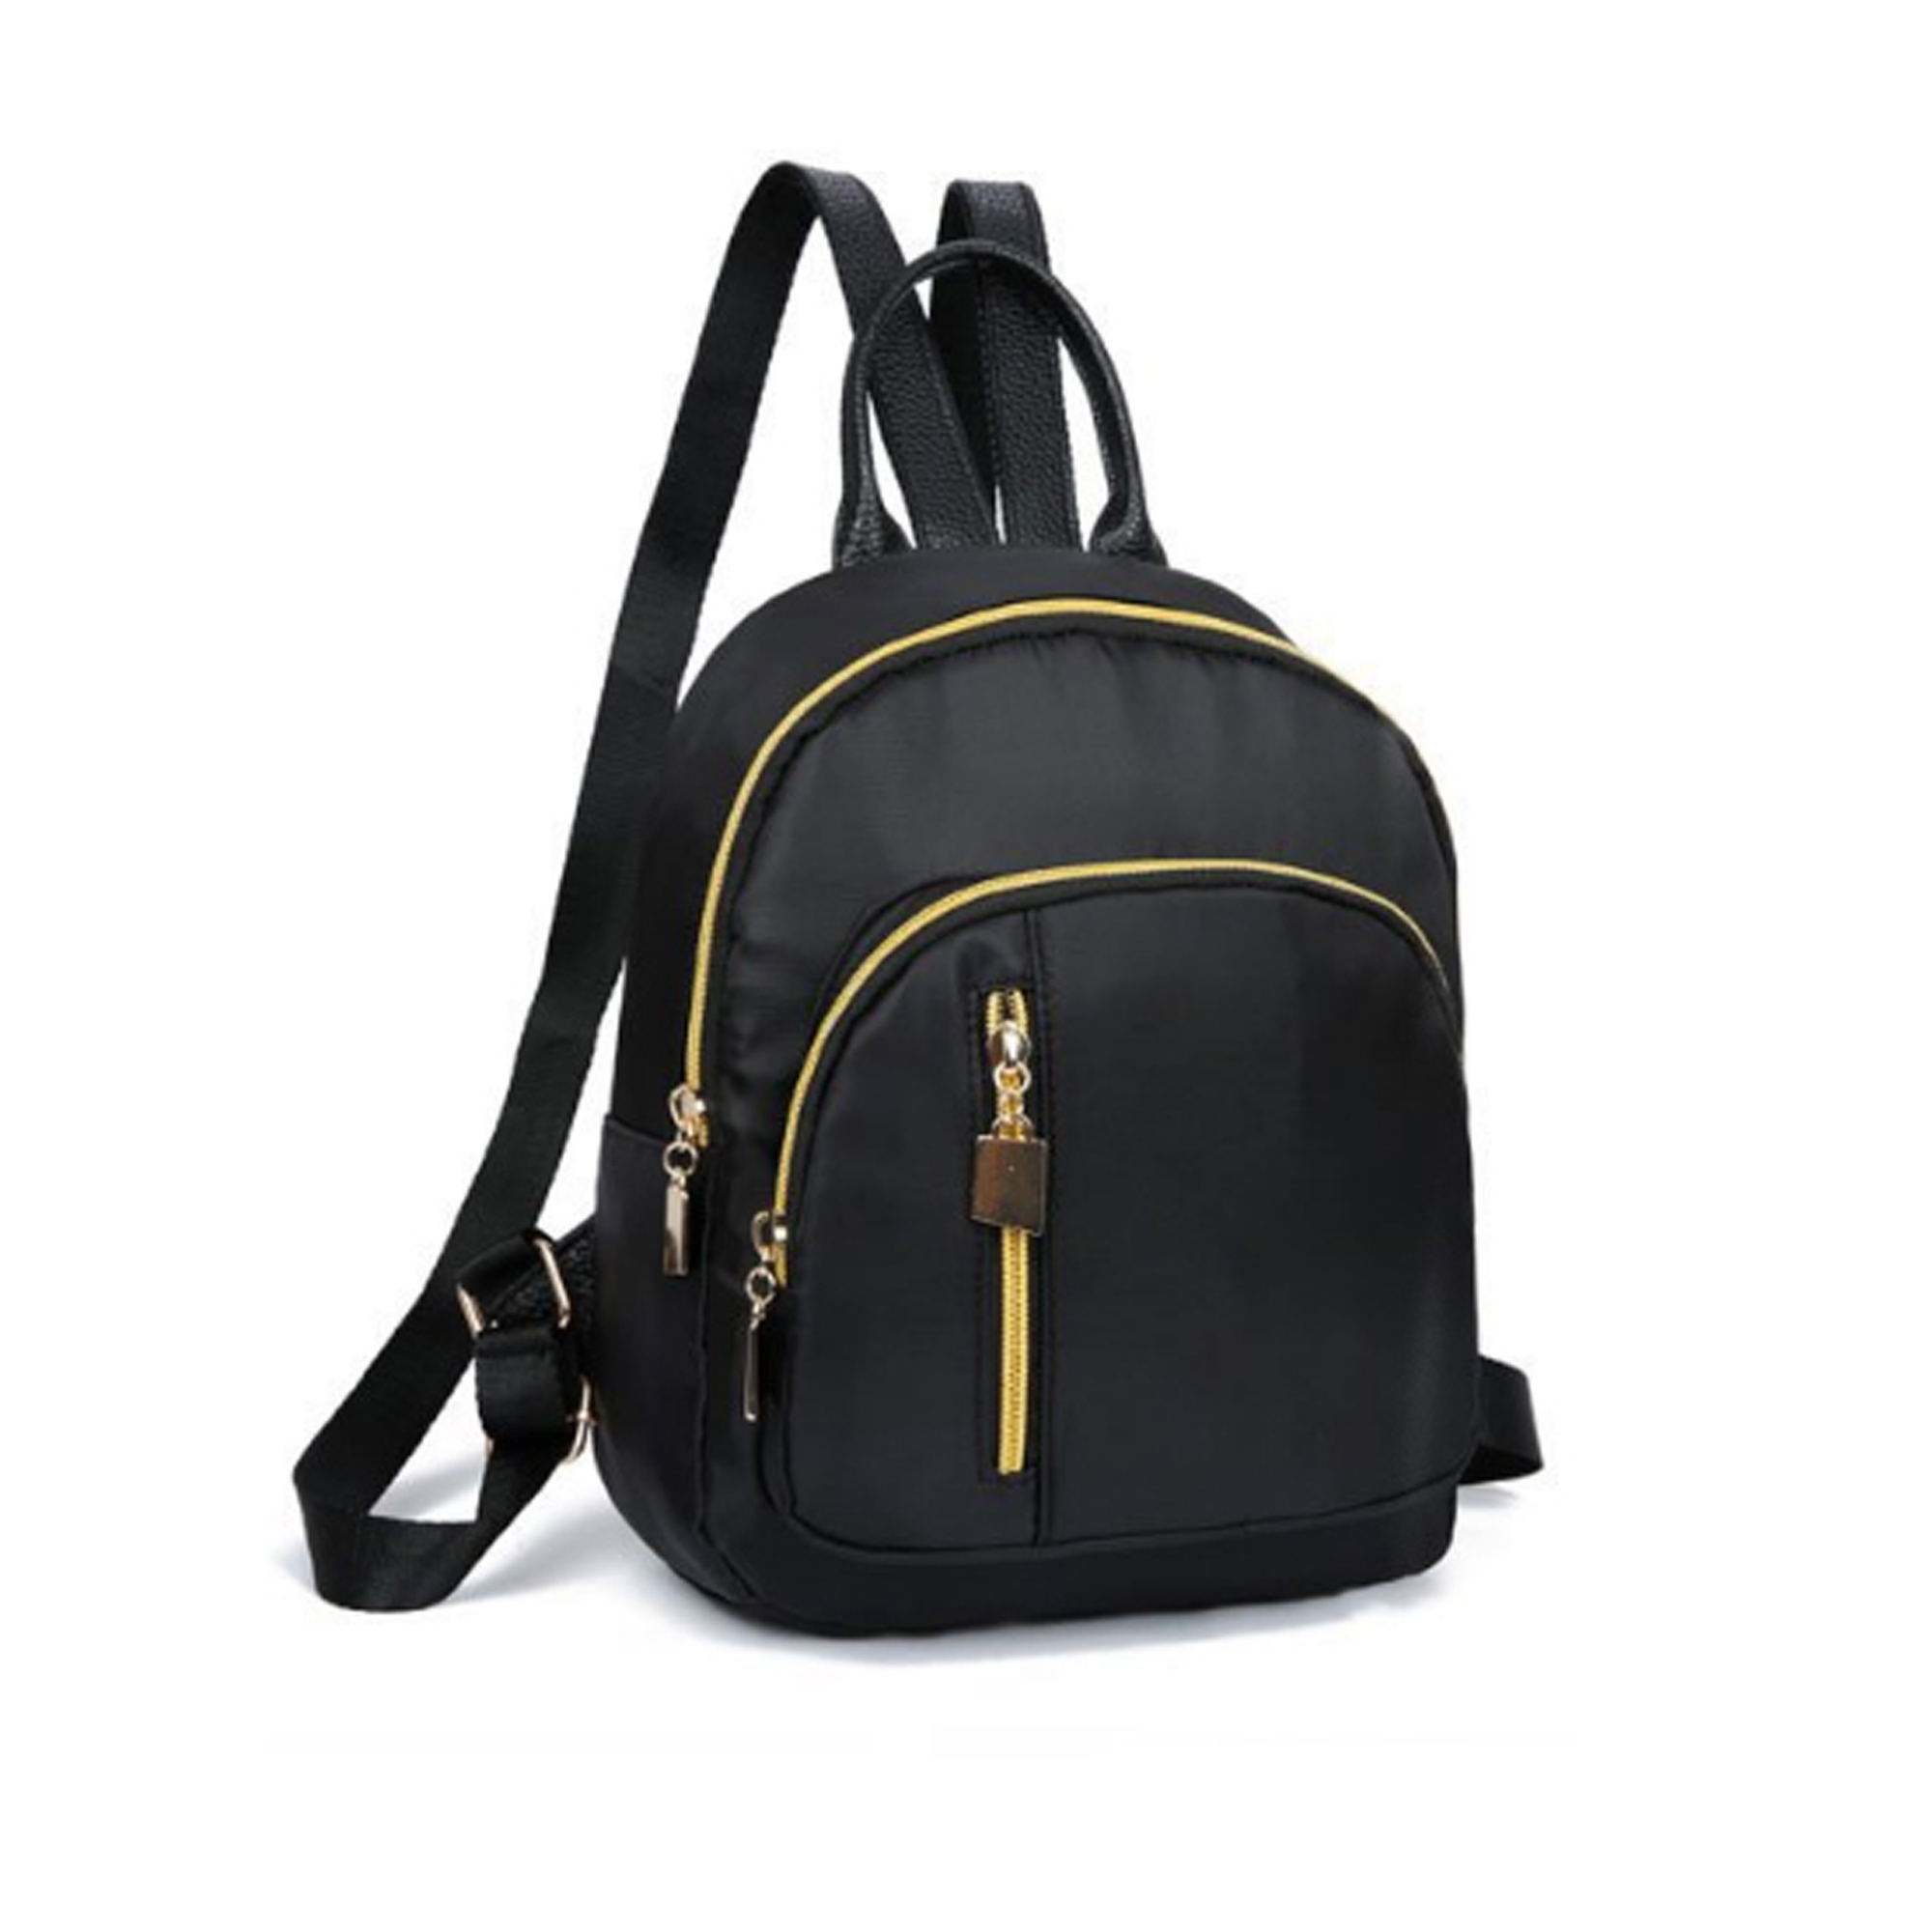 Hirigin Women Girls Black Nylon Mini Backpack Travel School Backpack Shoulder Bags - image 1 of 6